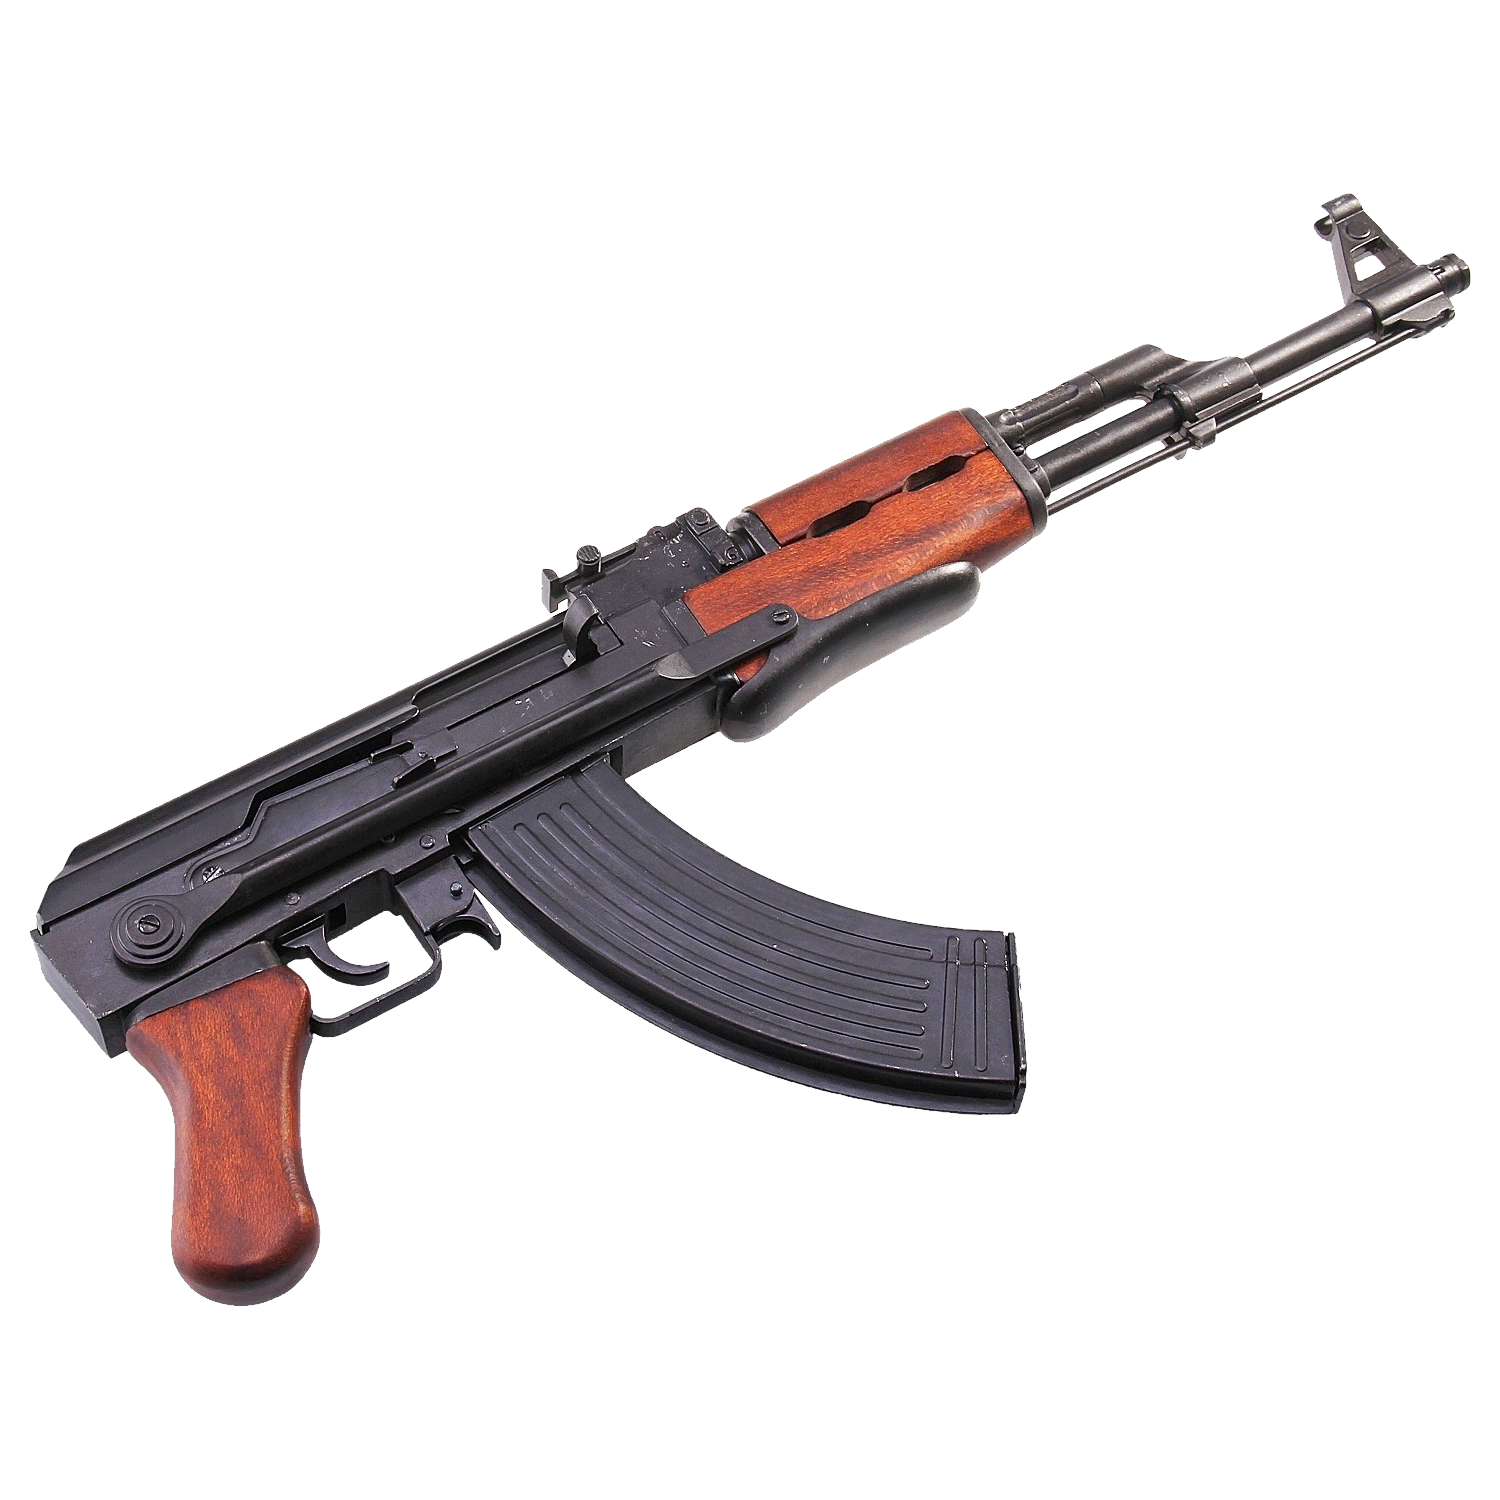 AK 47 Transparent Image